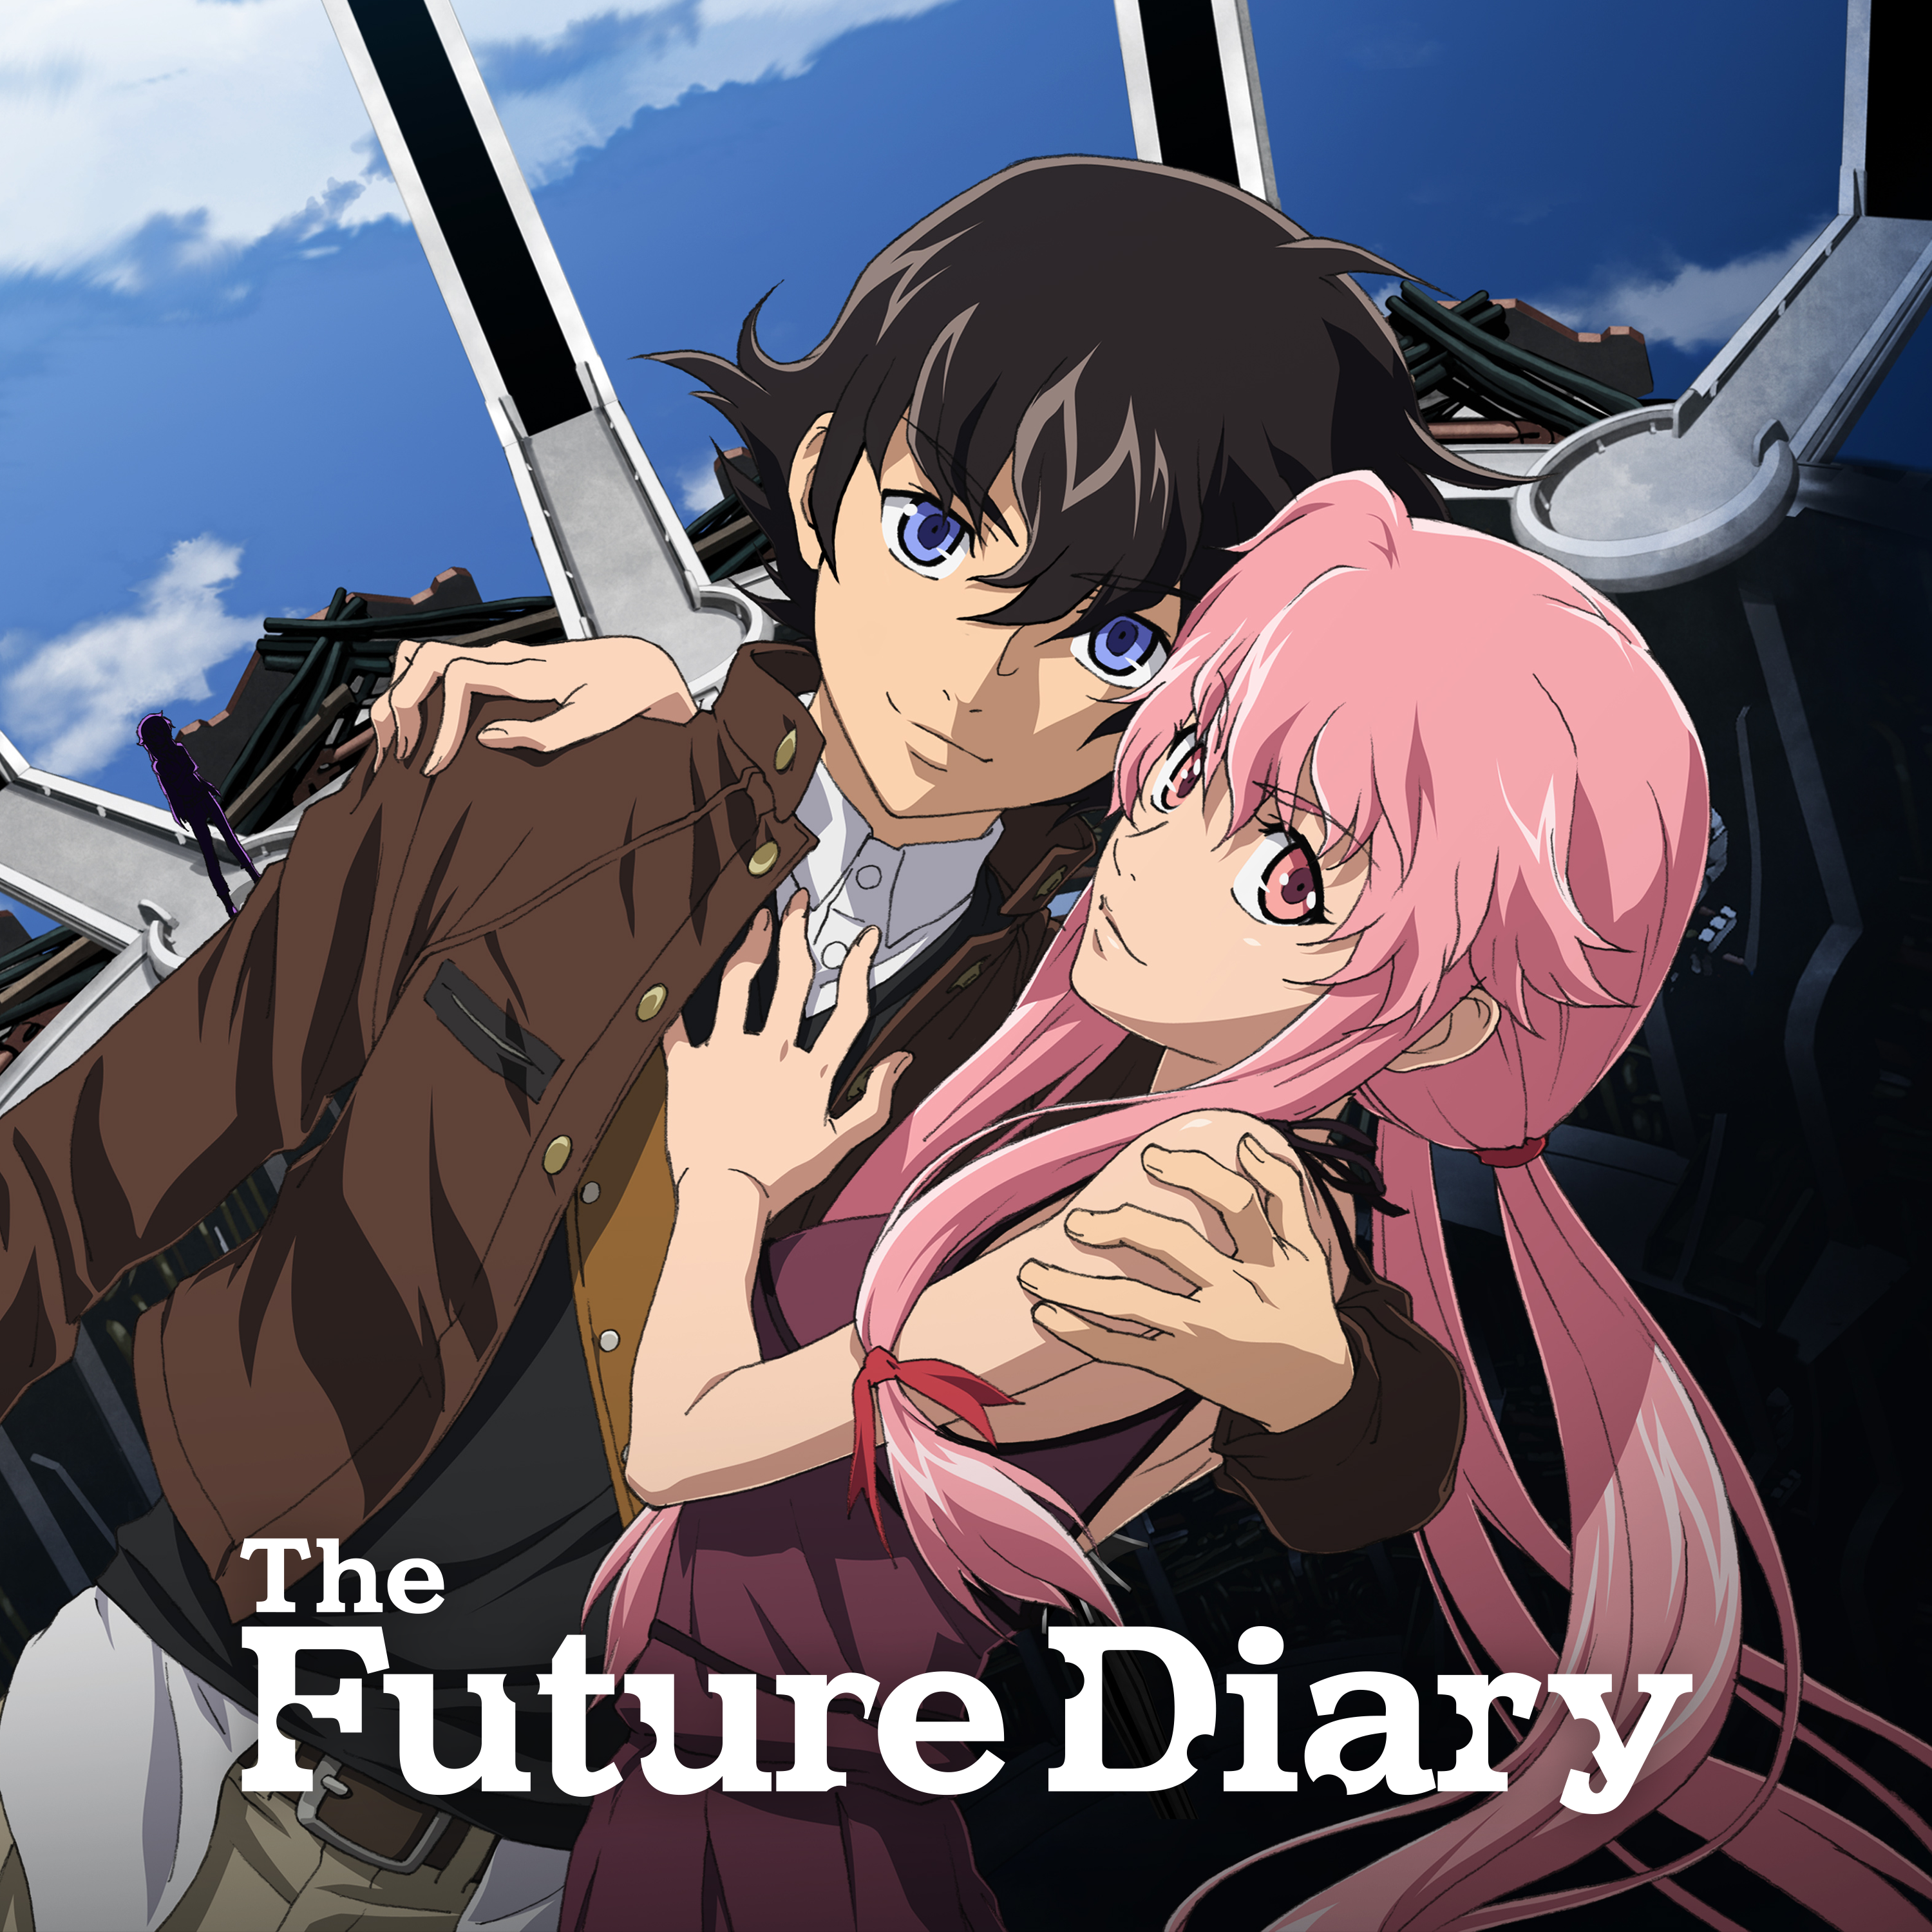 Watch The Future Diary Sub & Dub | Action/Adventure, Sci Fi Anime | Funimation